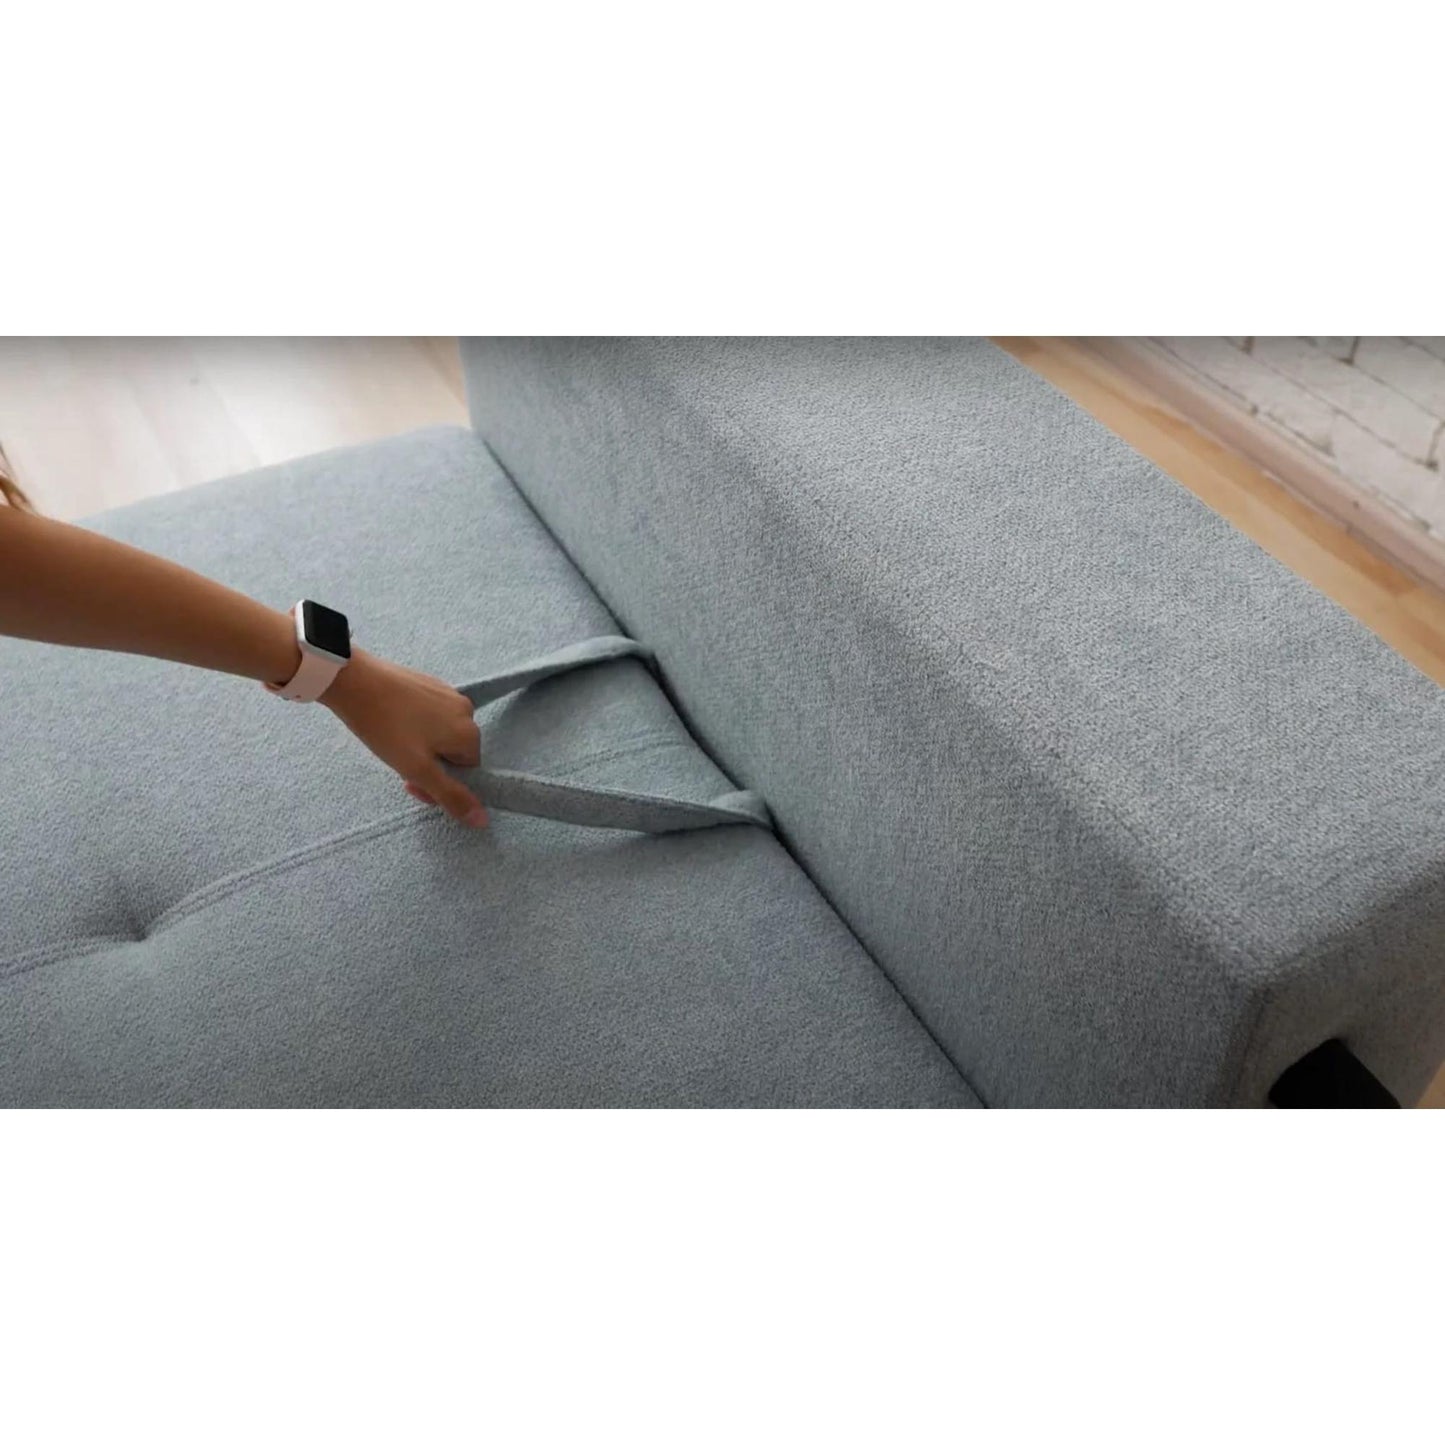 Flip Sofa Bed Large in Light Gray